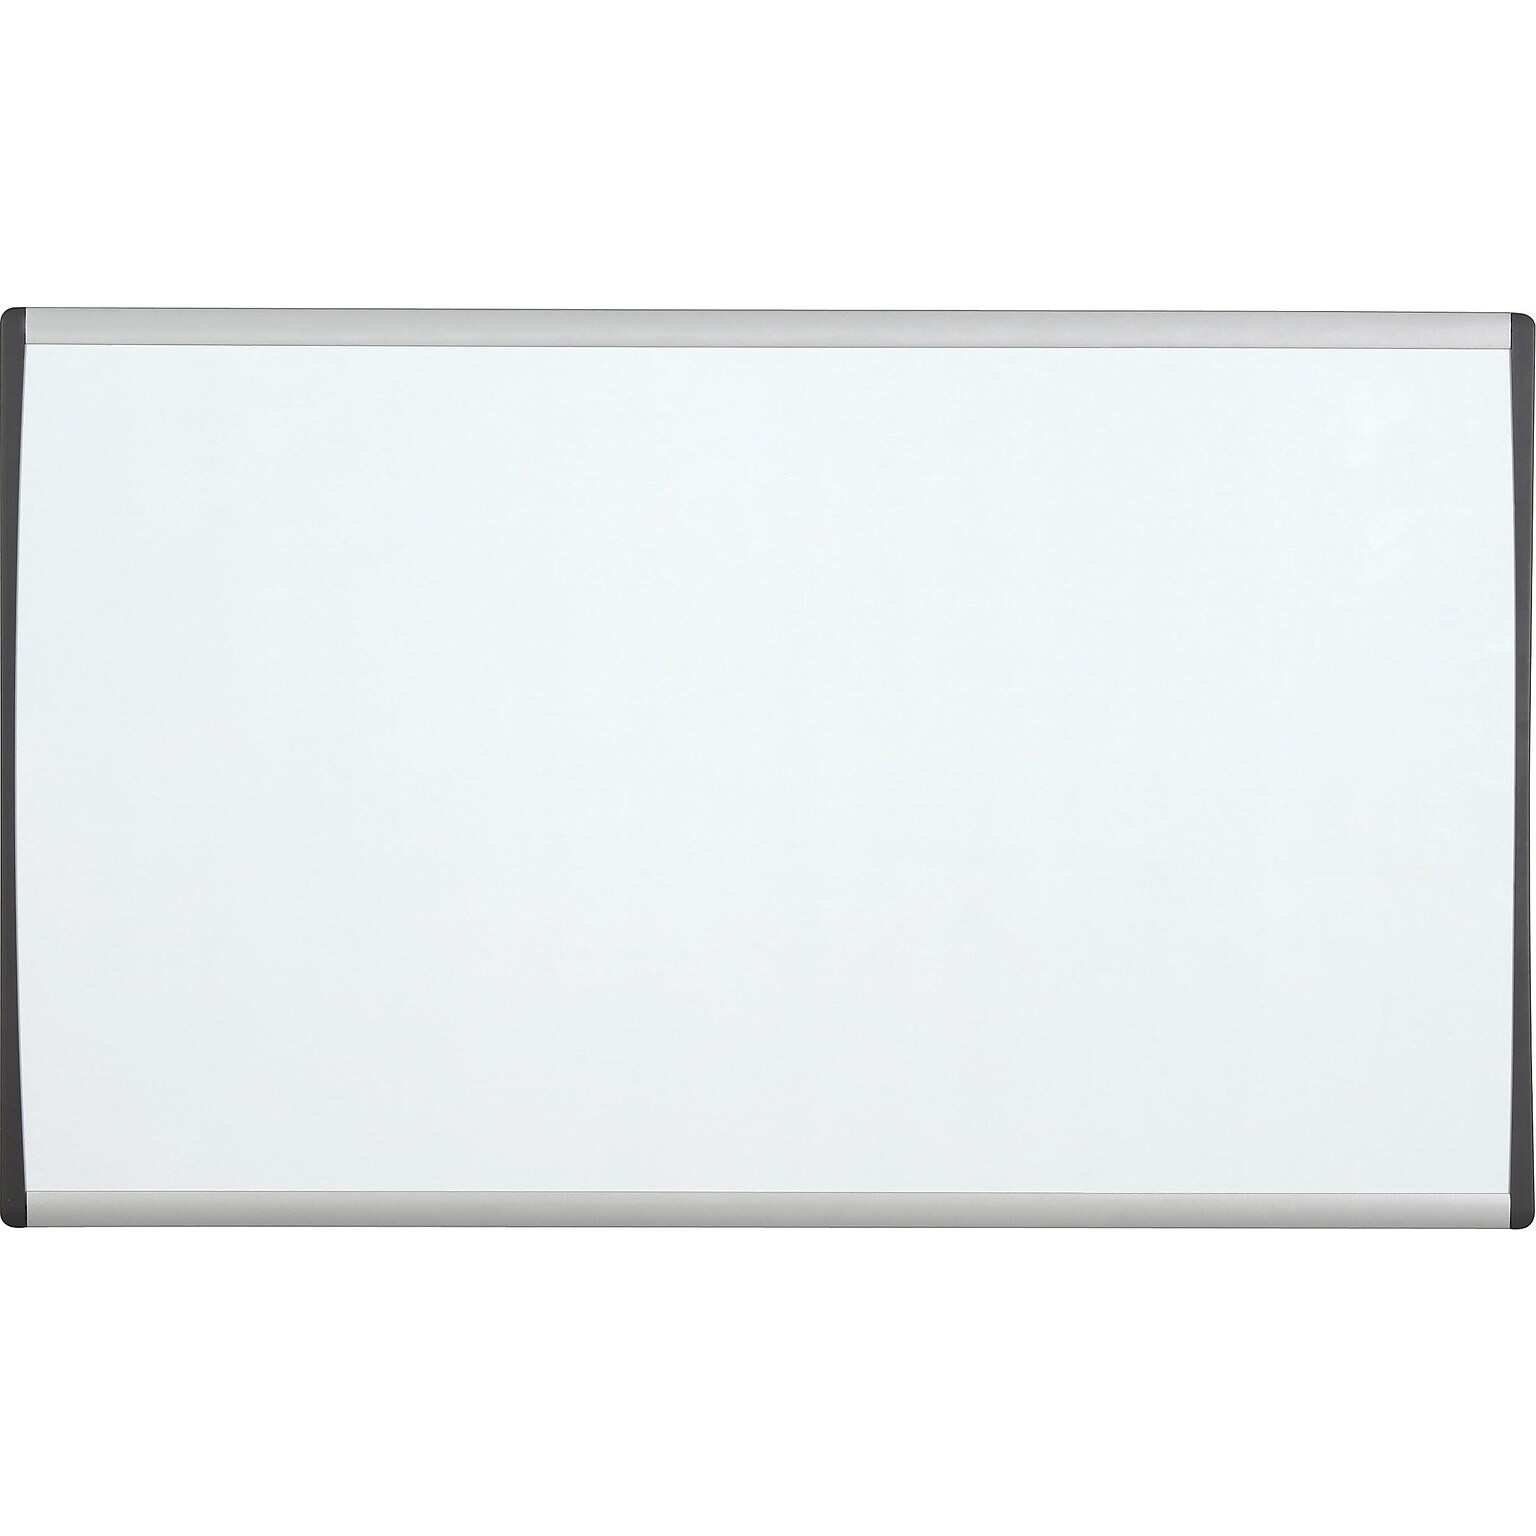 Quartet Arc Cubicle Painted Steel Dry-Erase Whiteboard, Aluminum Frame, 2 x 1 (ARC2414)